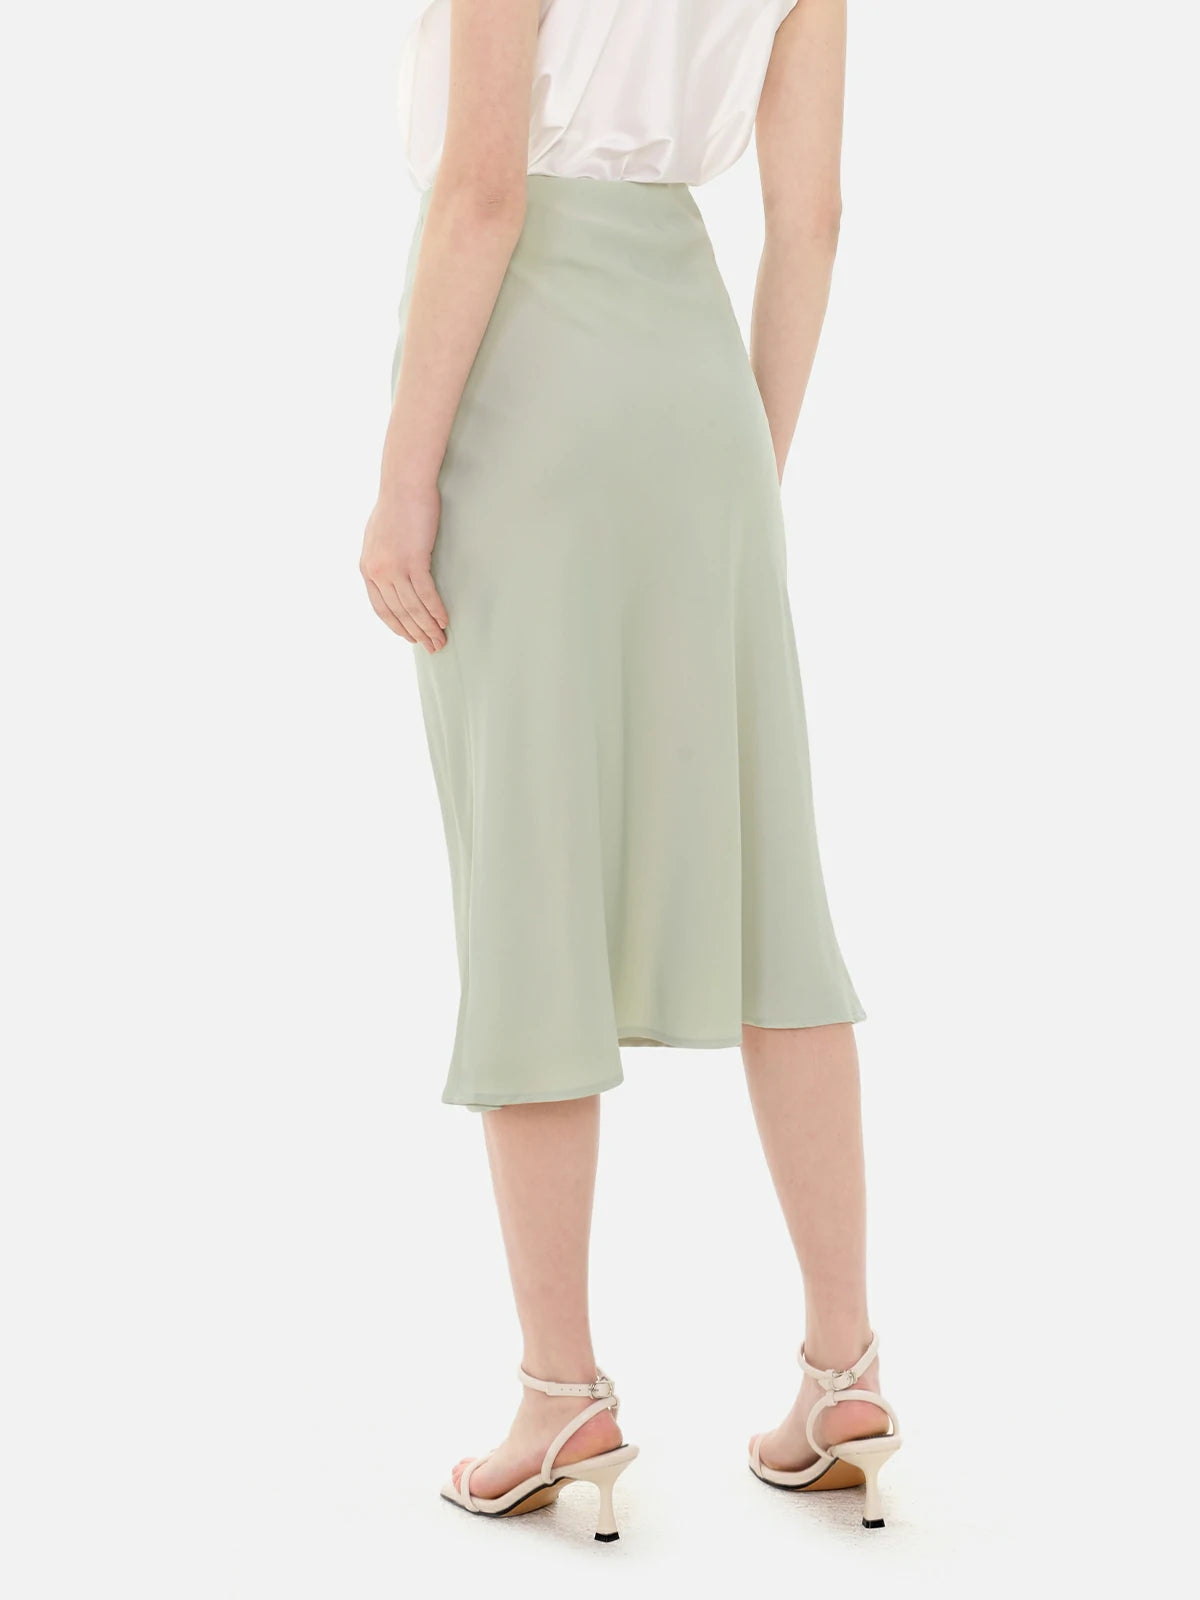 Elegant classic style green satin skirt